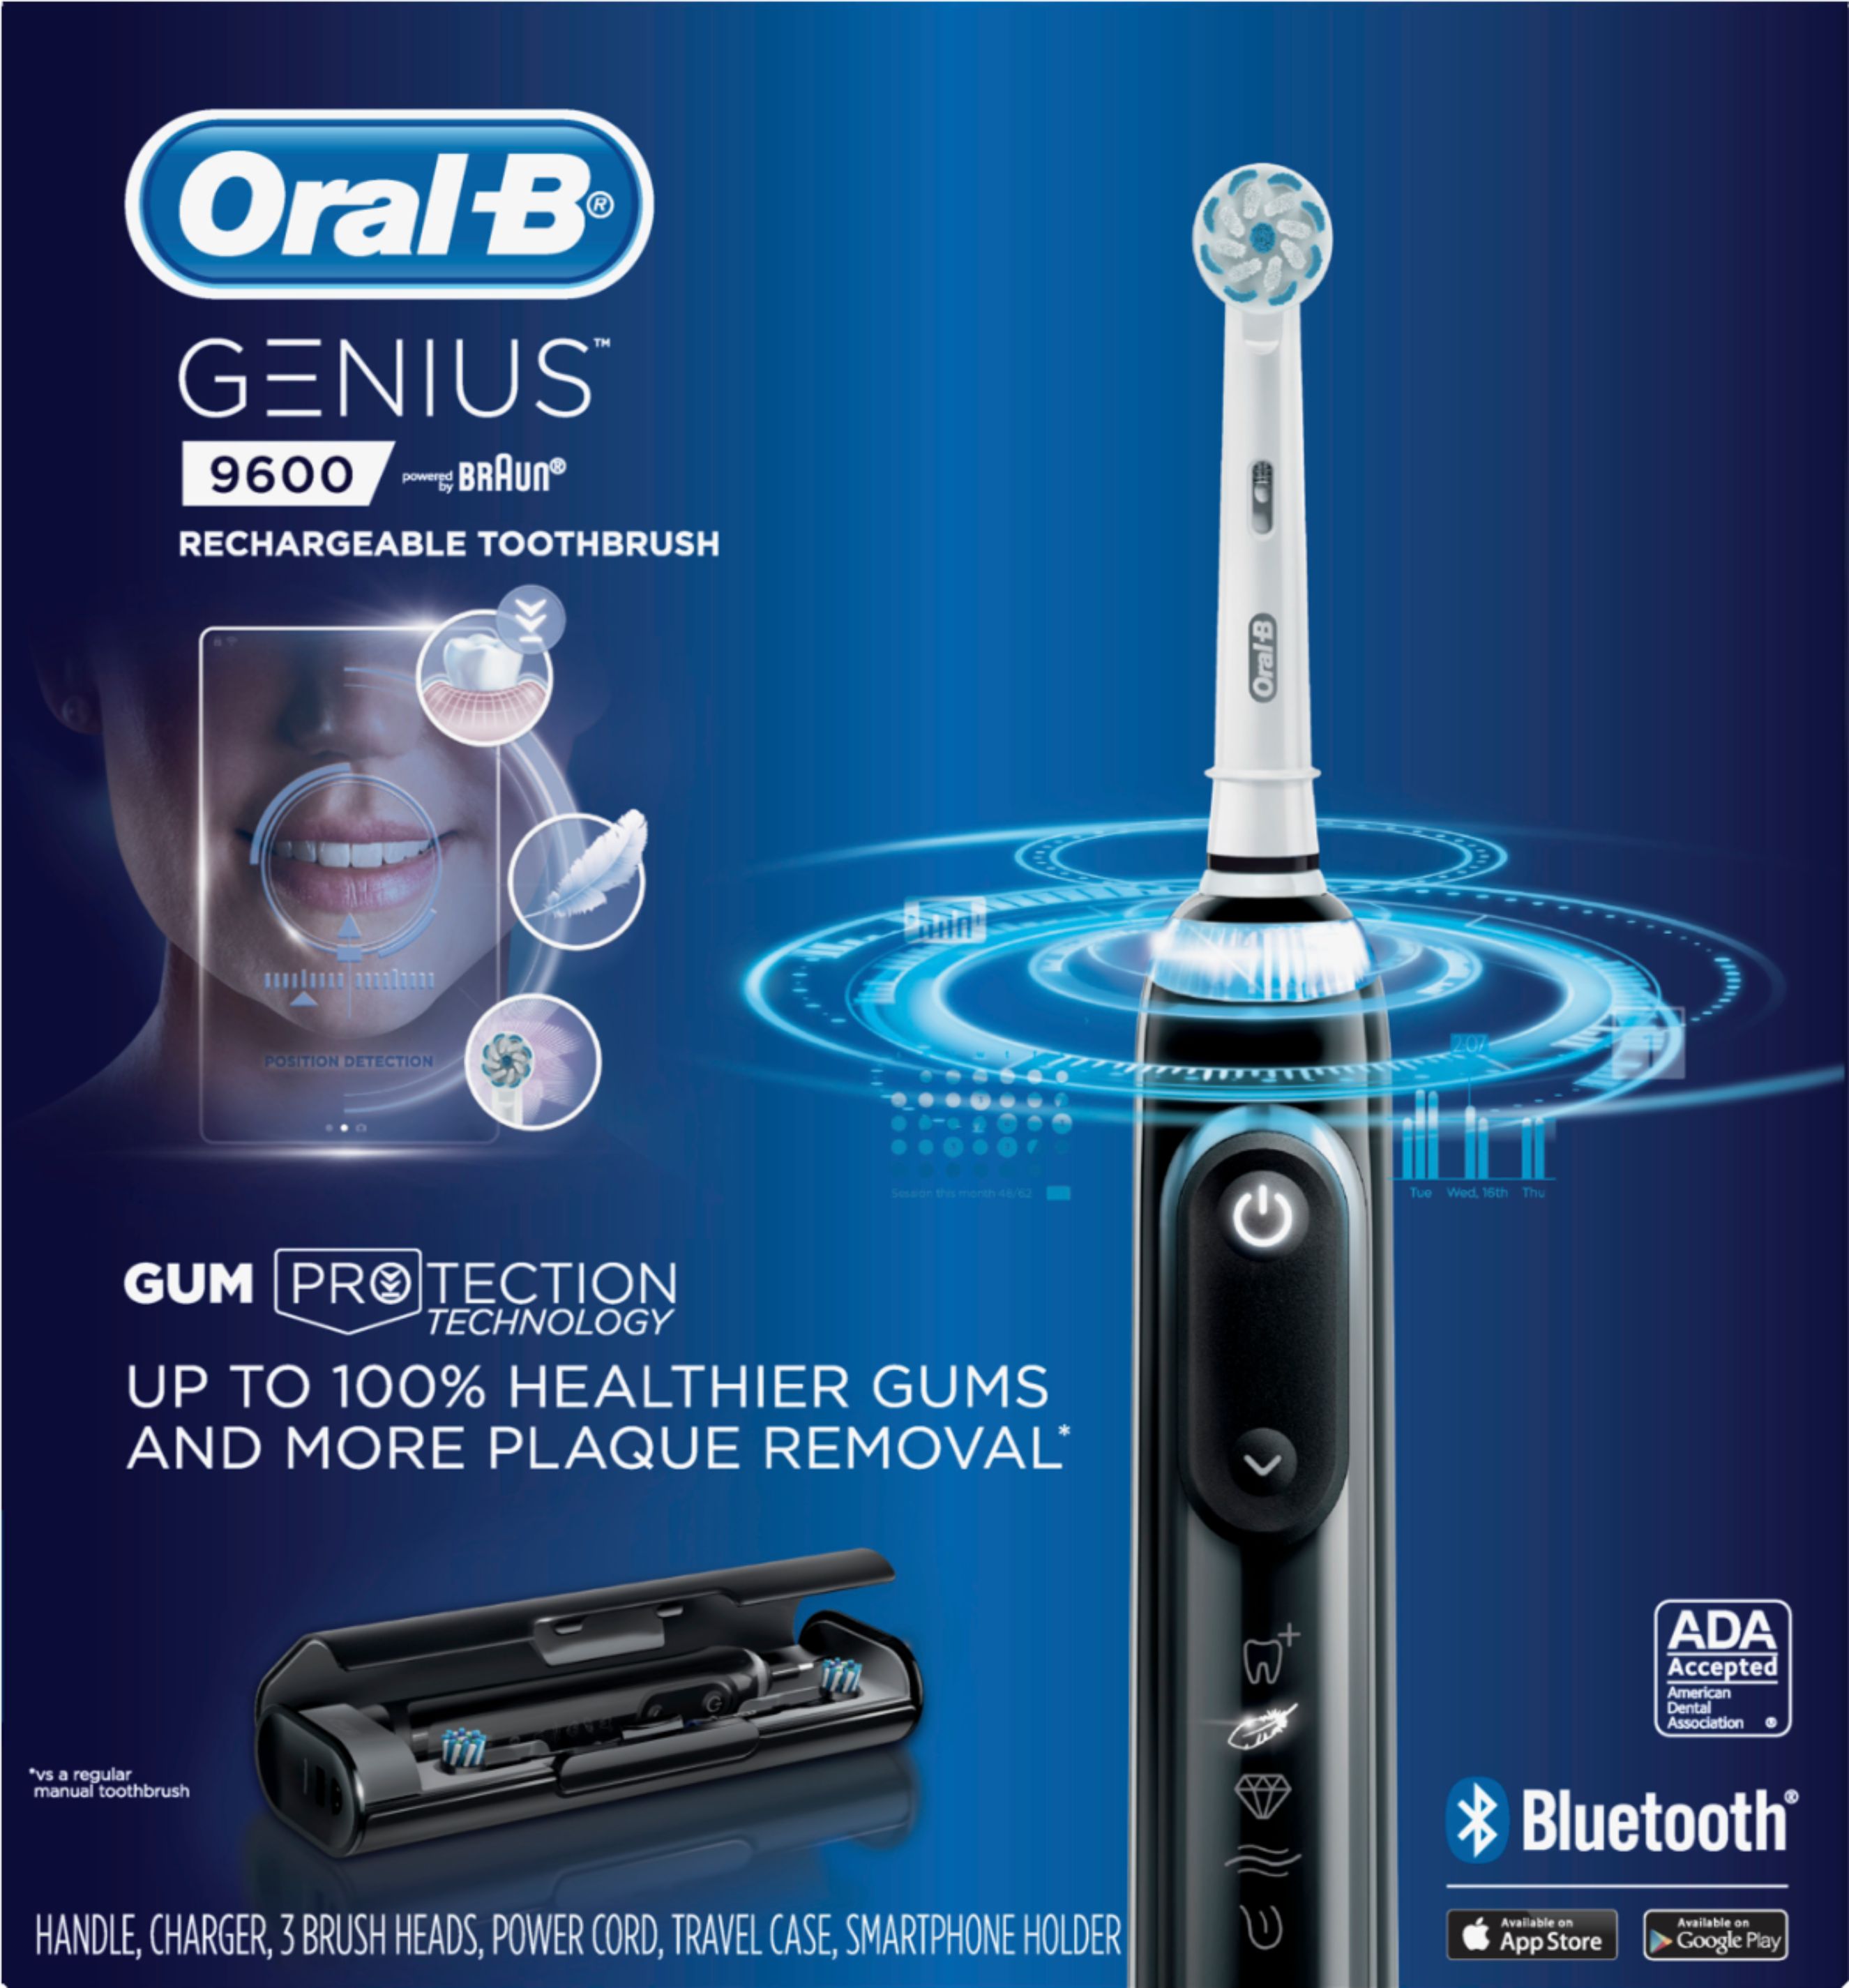 Oral B Genius Electric Toothbrush Review